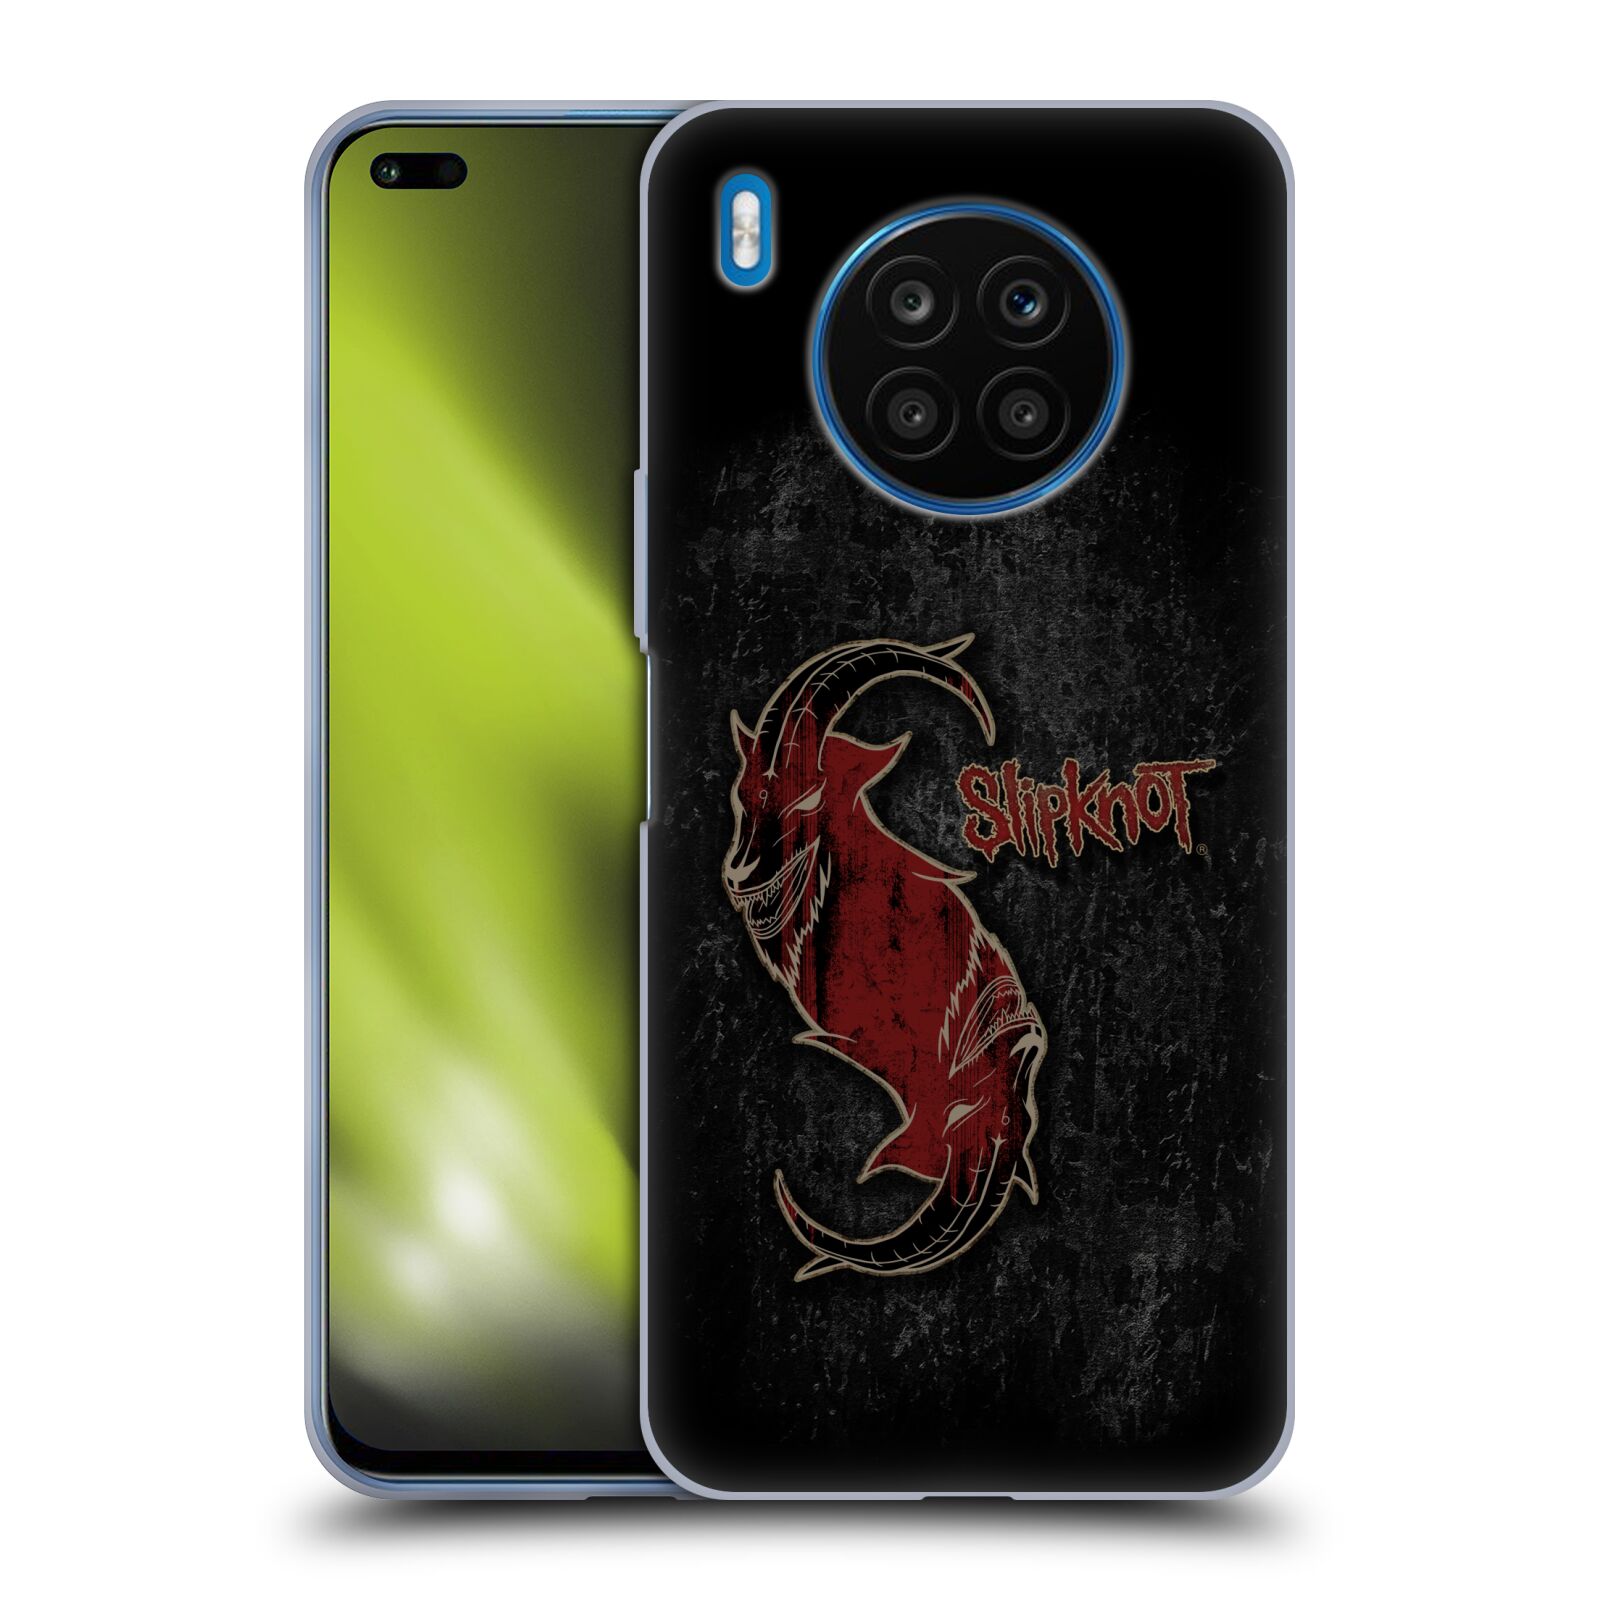 Silikonové pouzdro na mobil Huawei Nova 8i / Honor 50 Lite - Head Case - Slipknot - Rudý kozel